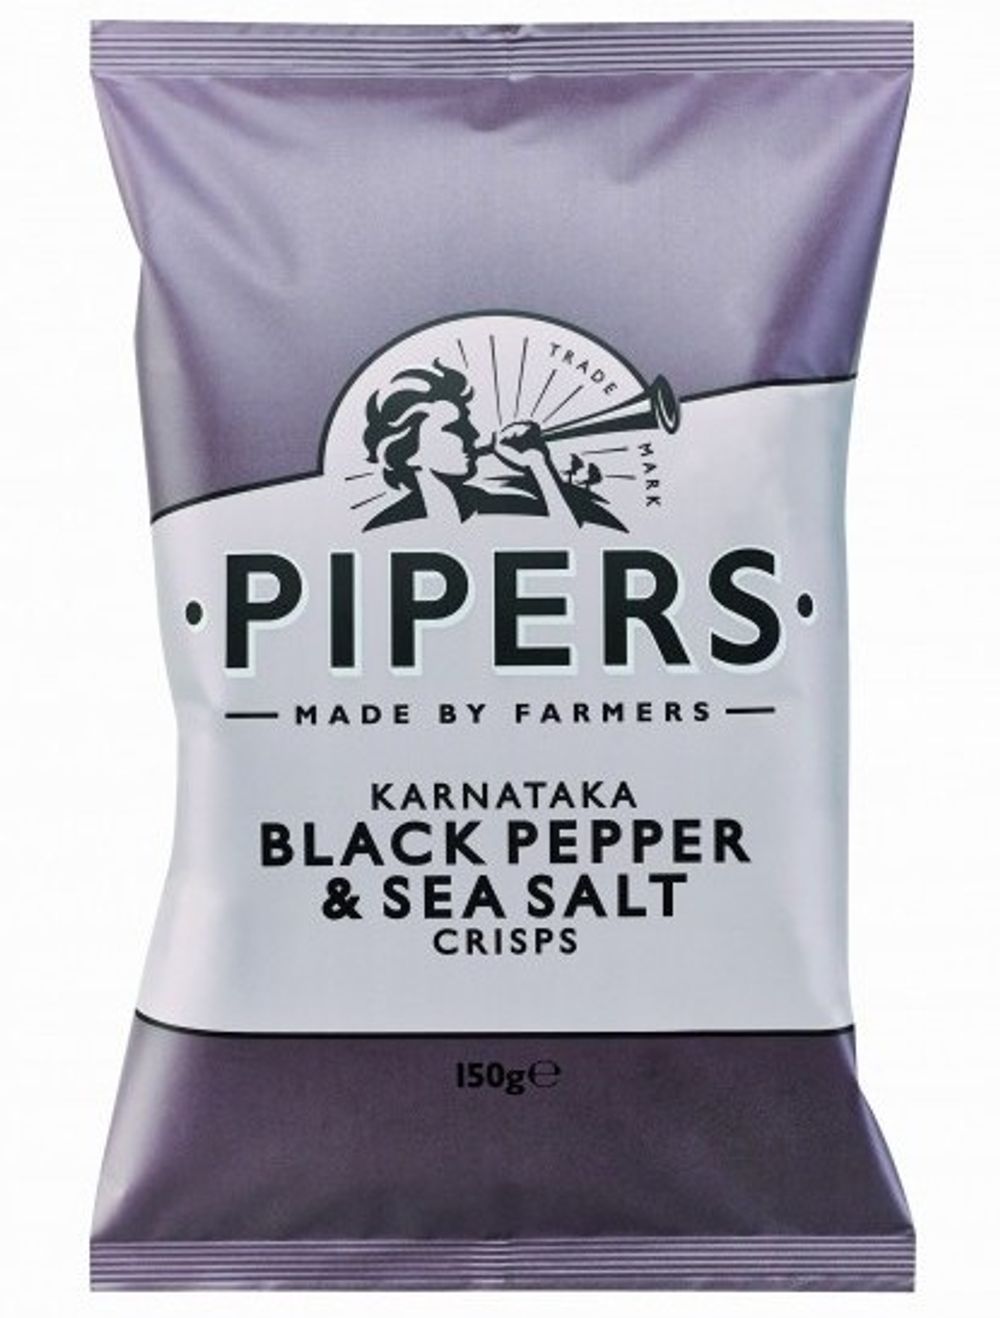 Karnataka Black Pepper and Sea Salt Crisps